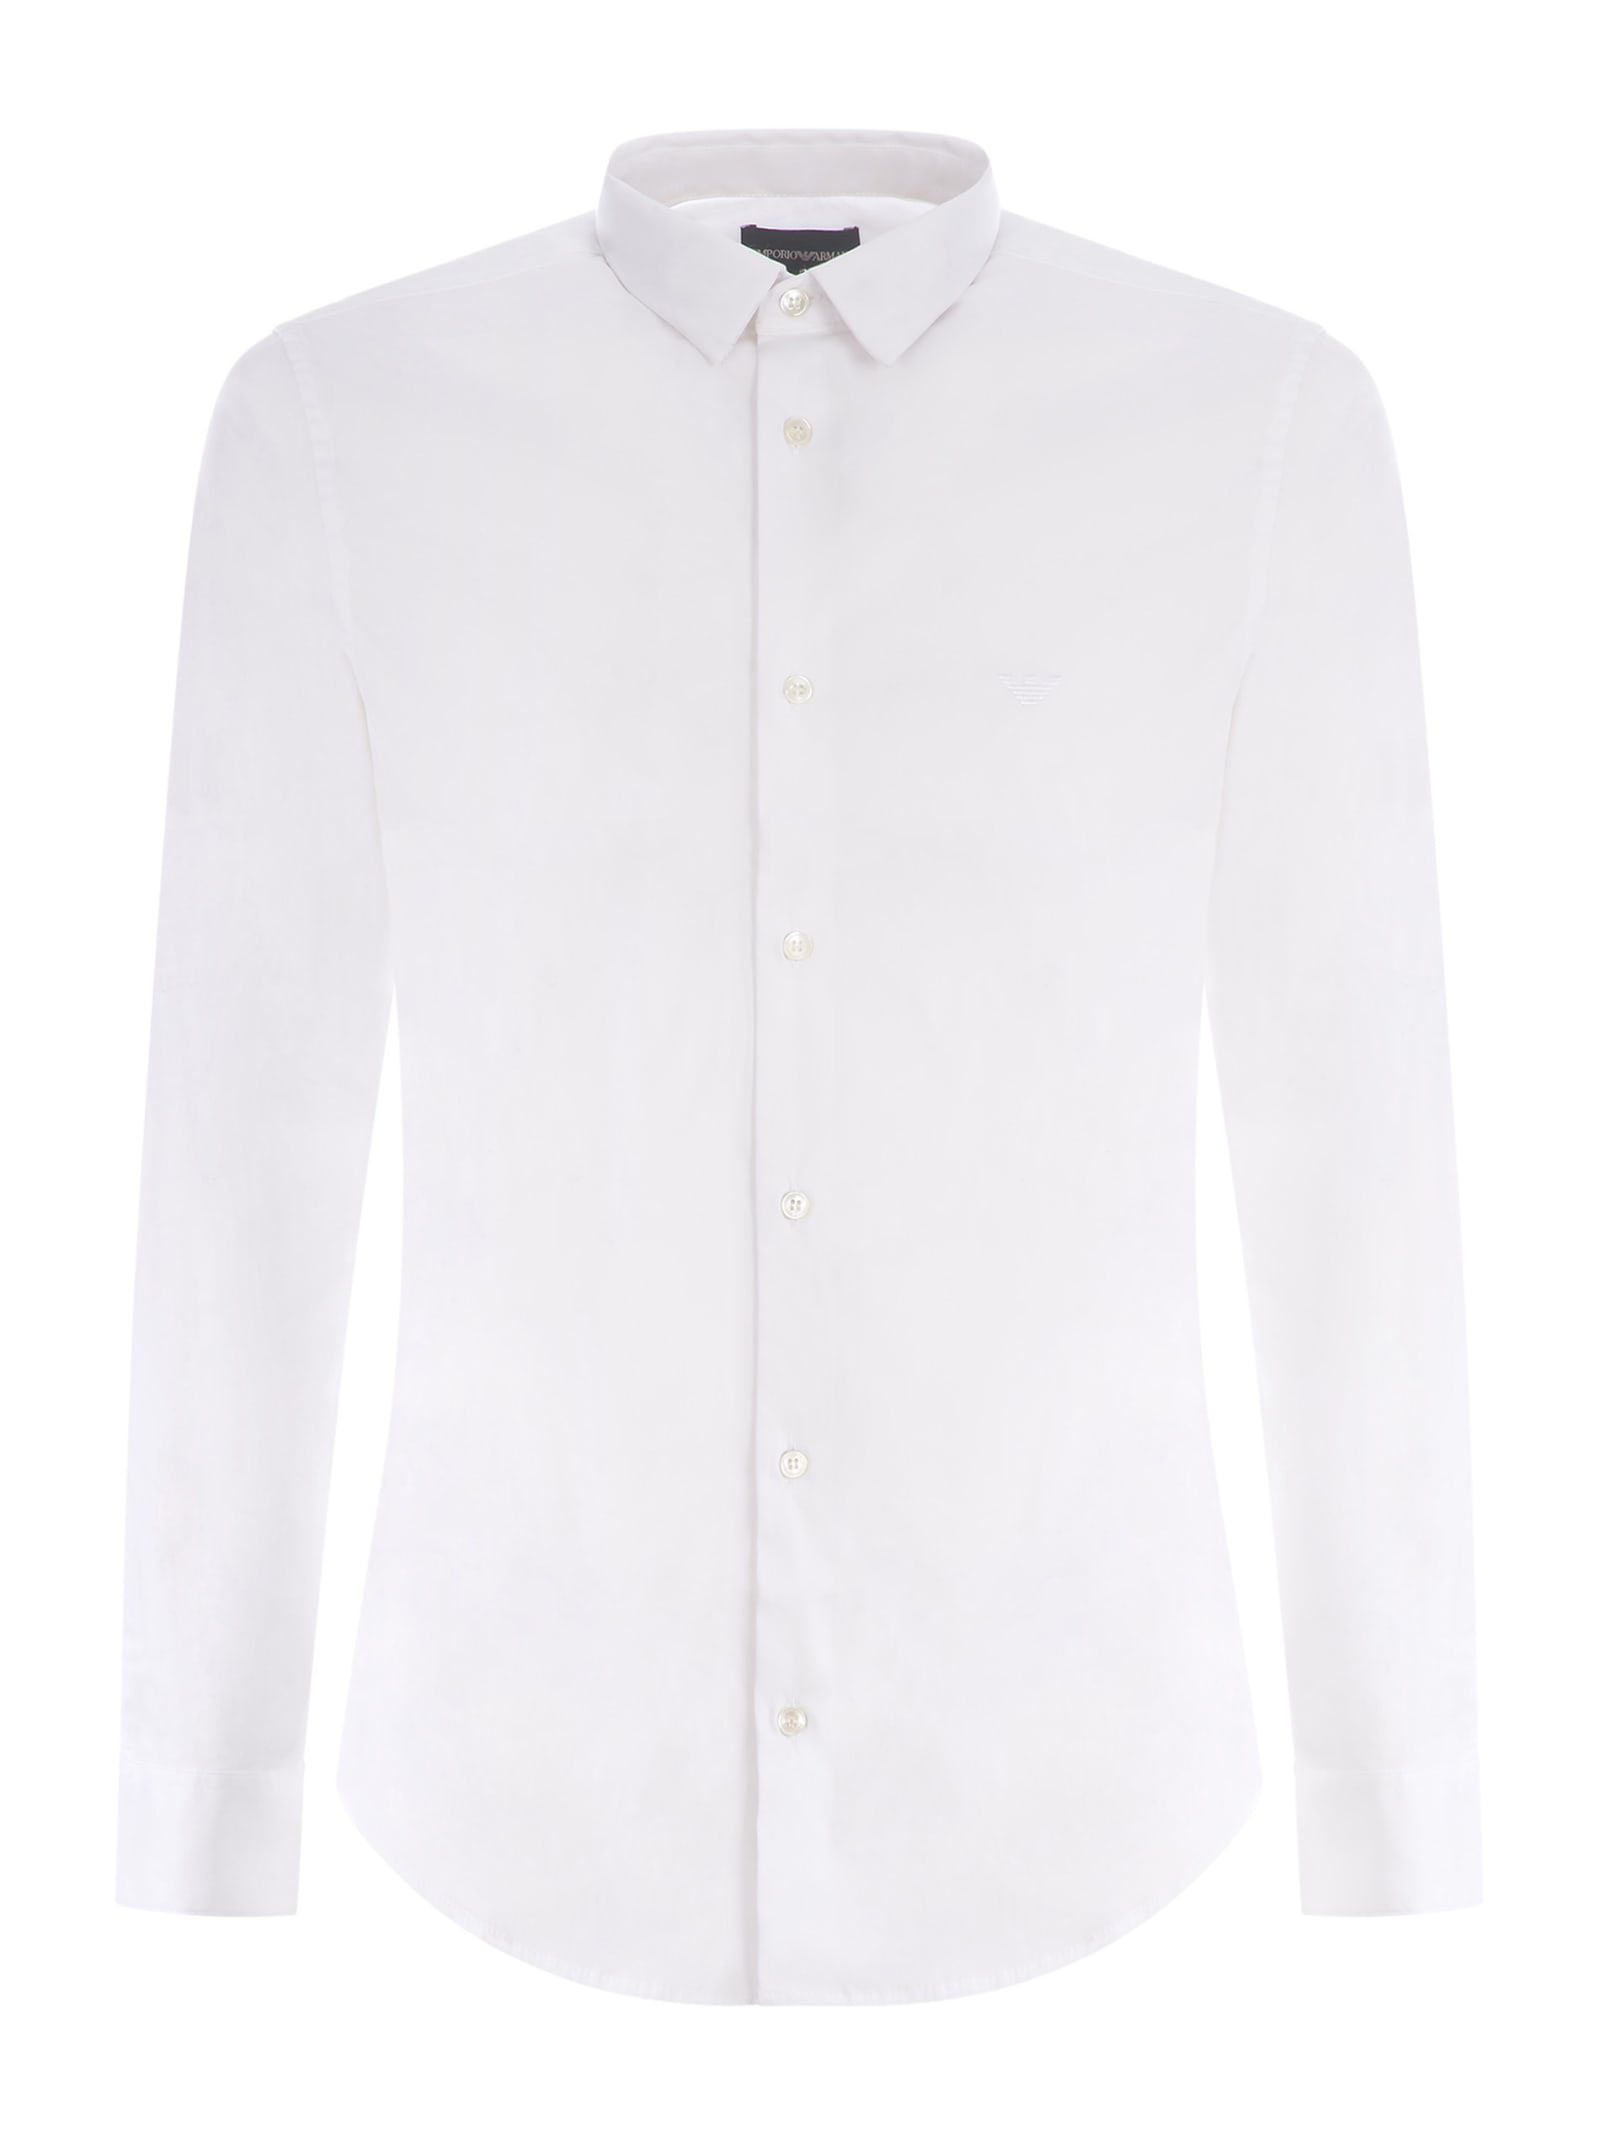 Emporio Armani Shirt  In Stretch Cotton Available Store Pompei In White